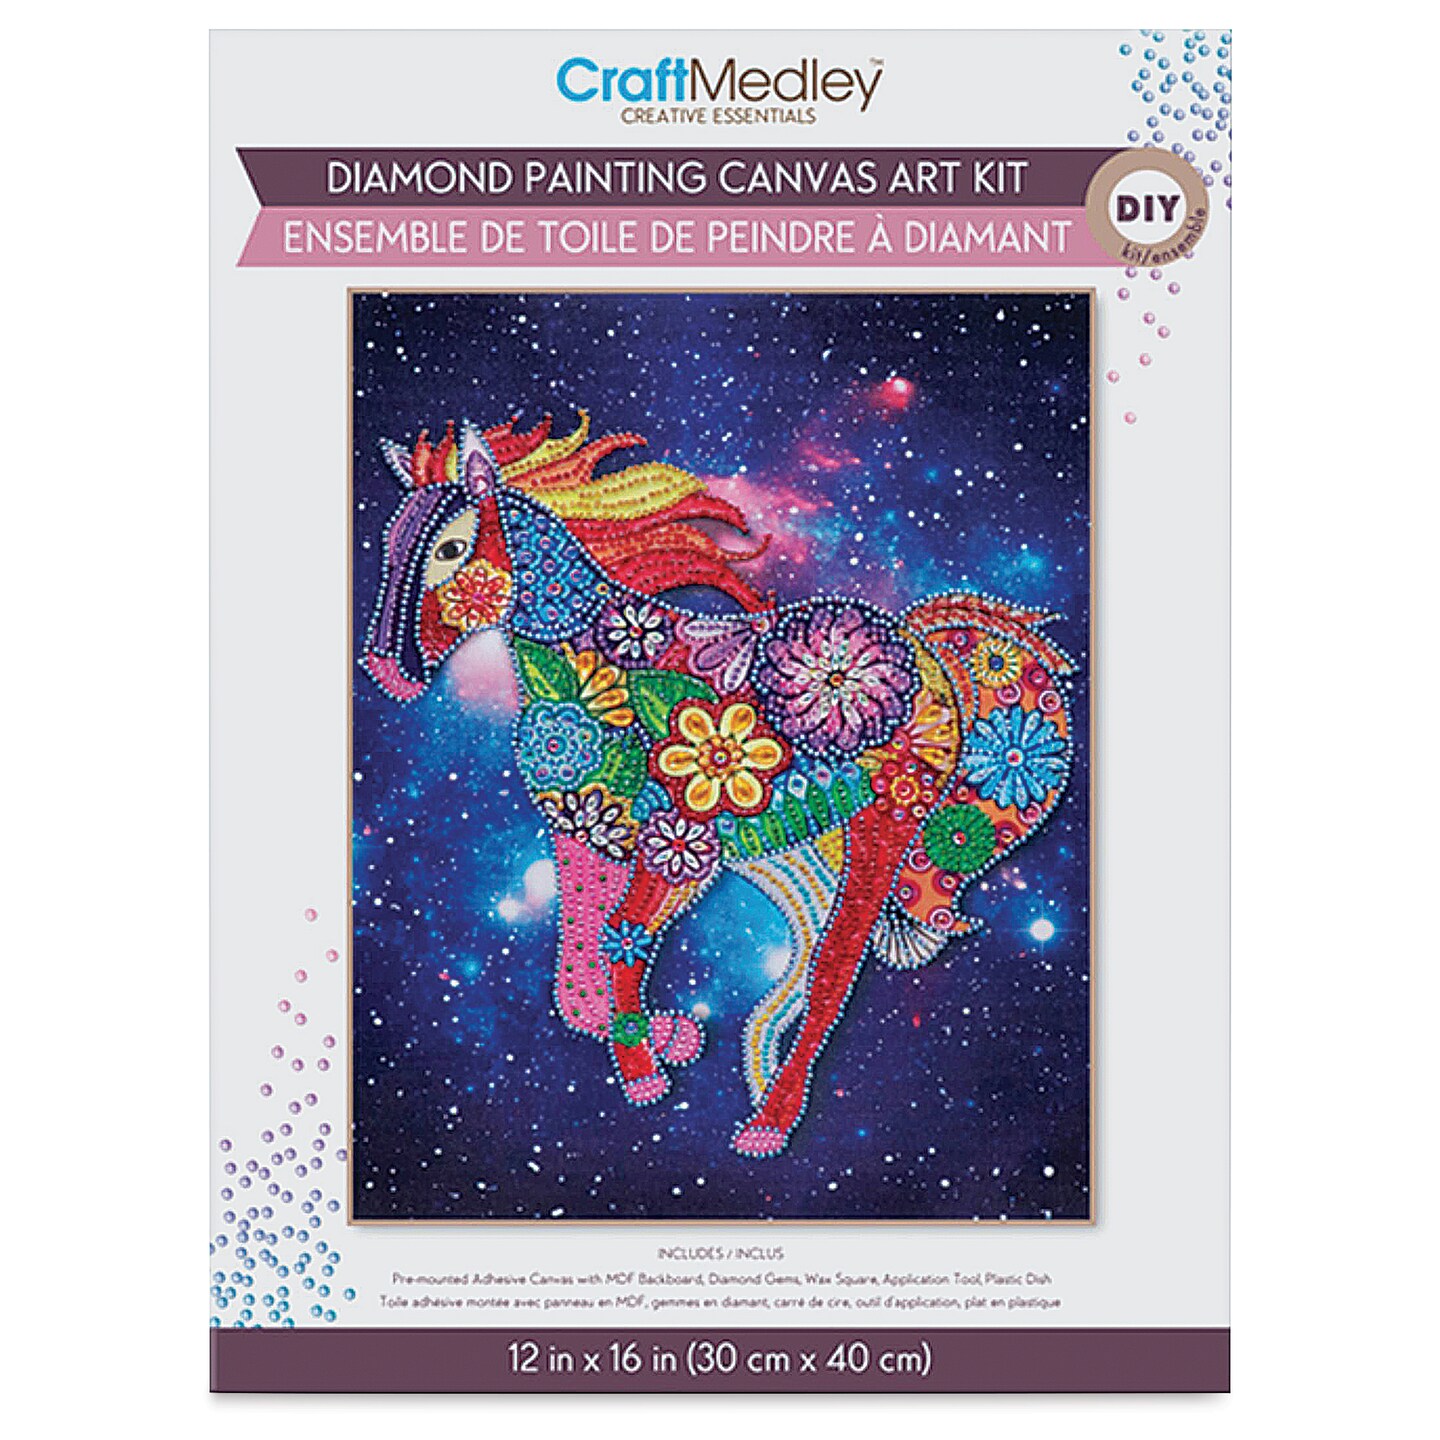 Craft Medley Diamond Painting Canvas Art Kit - Horse